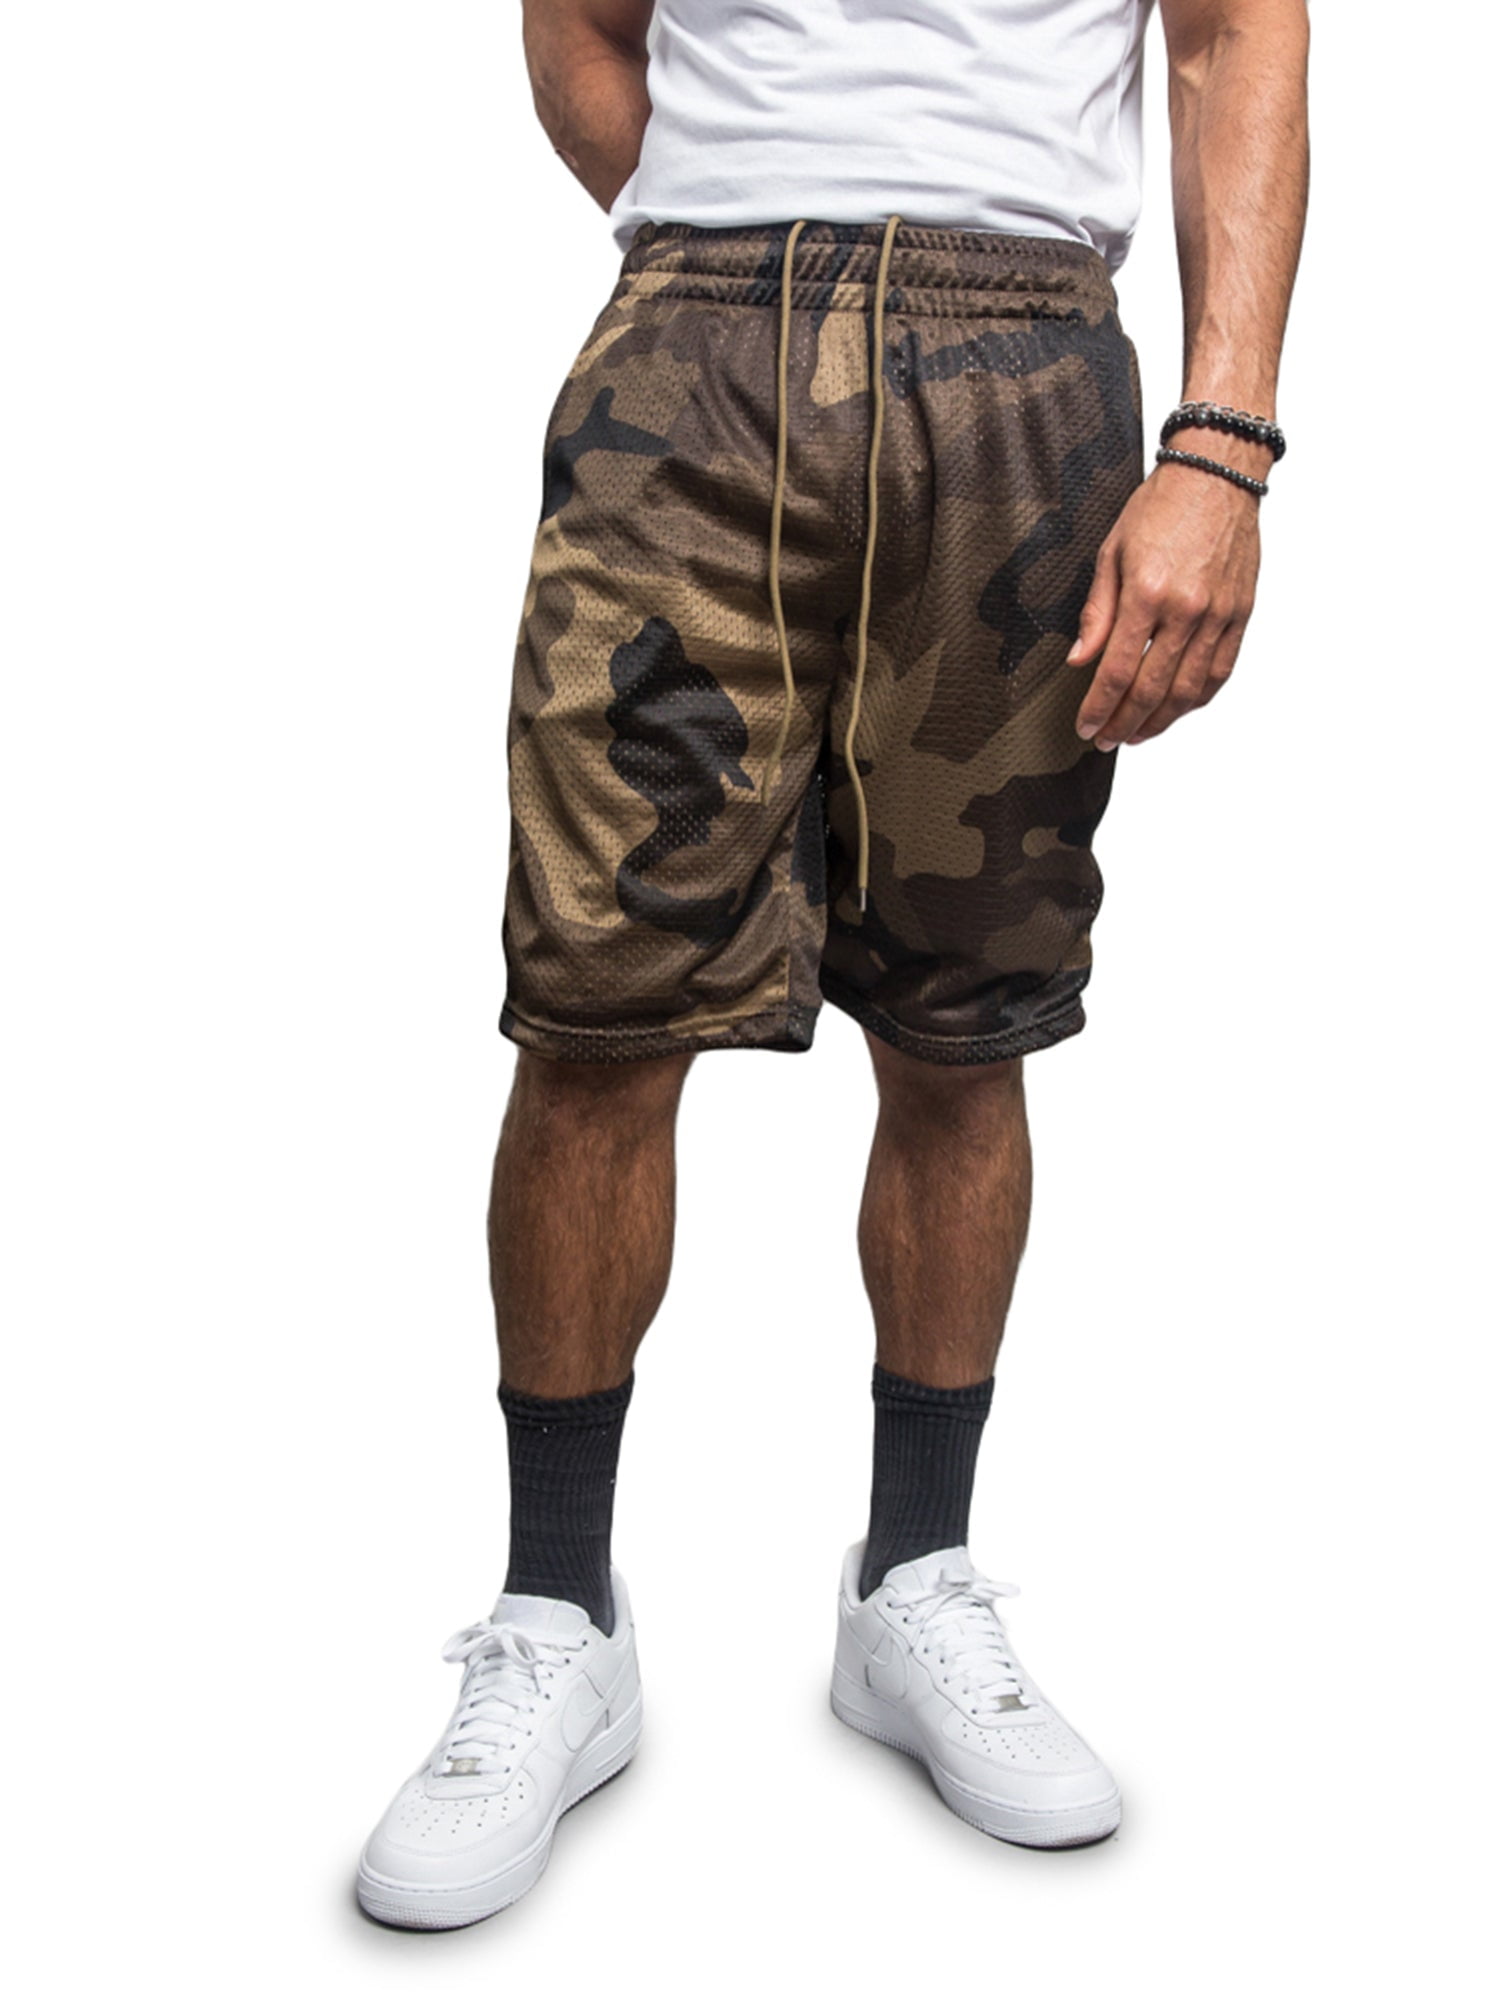 Mesh Workout Gym Sports Active Running Athletic Pants with Pockets Regular Big S ~ 5XL Shaka Wear Men's Basketball Shorts 